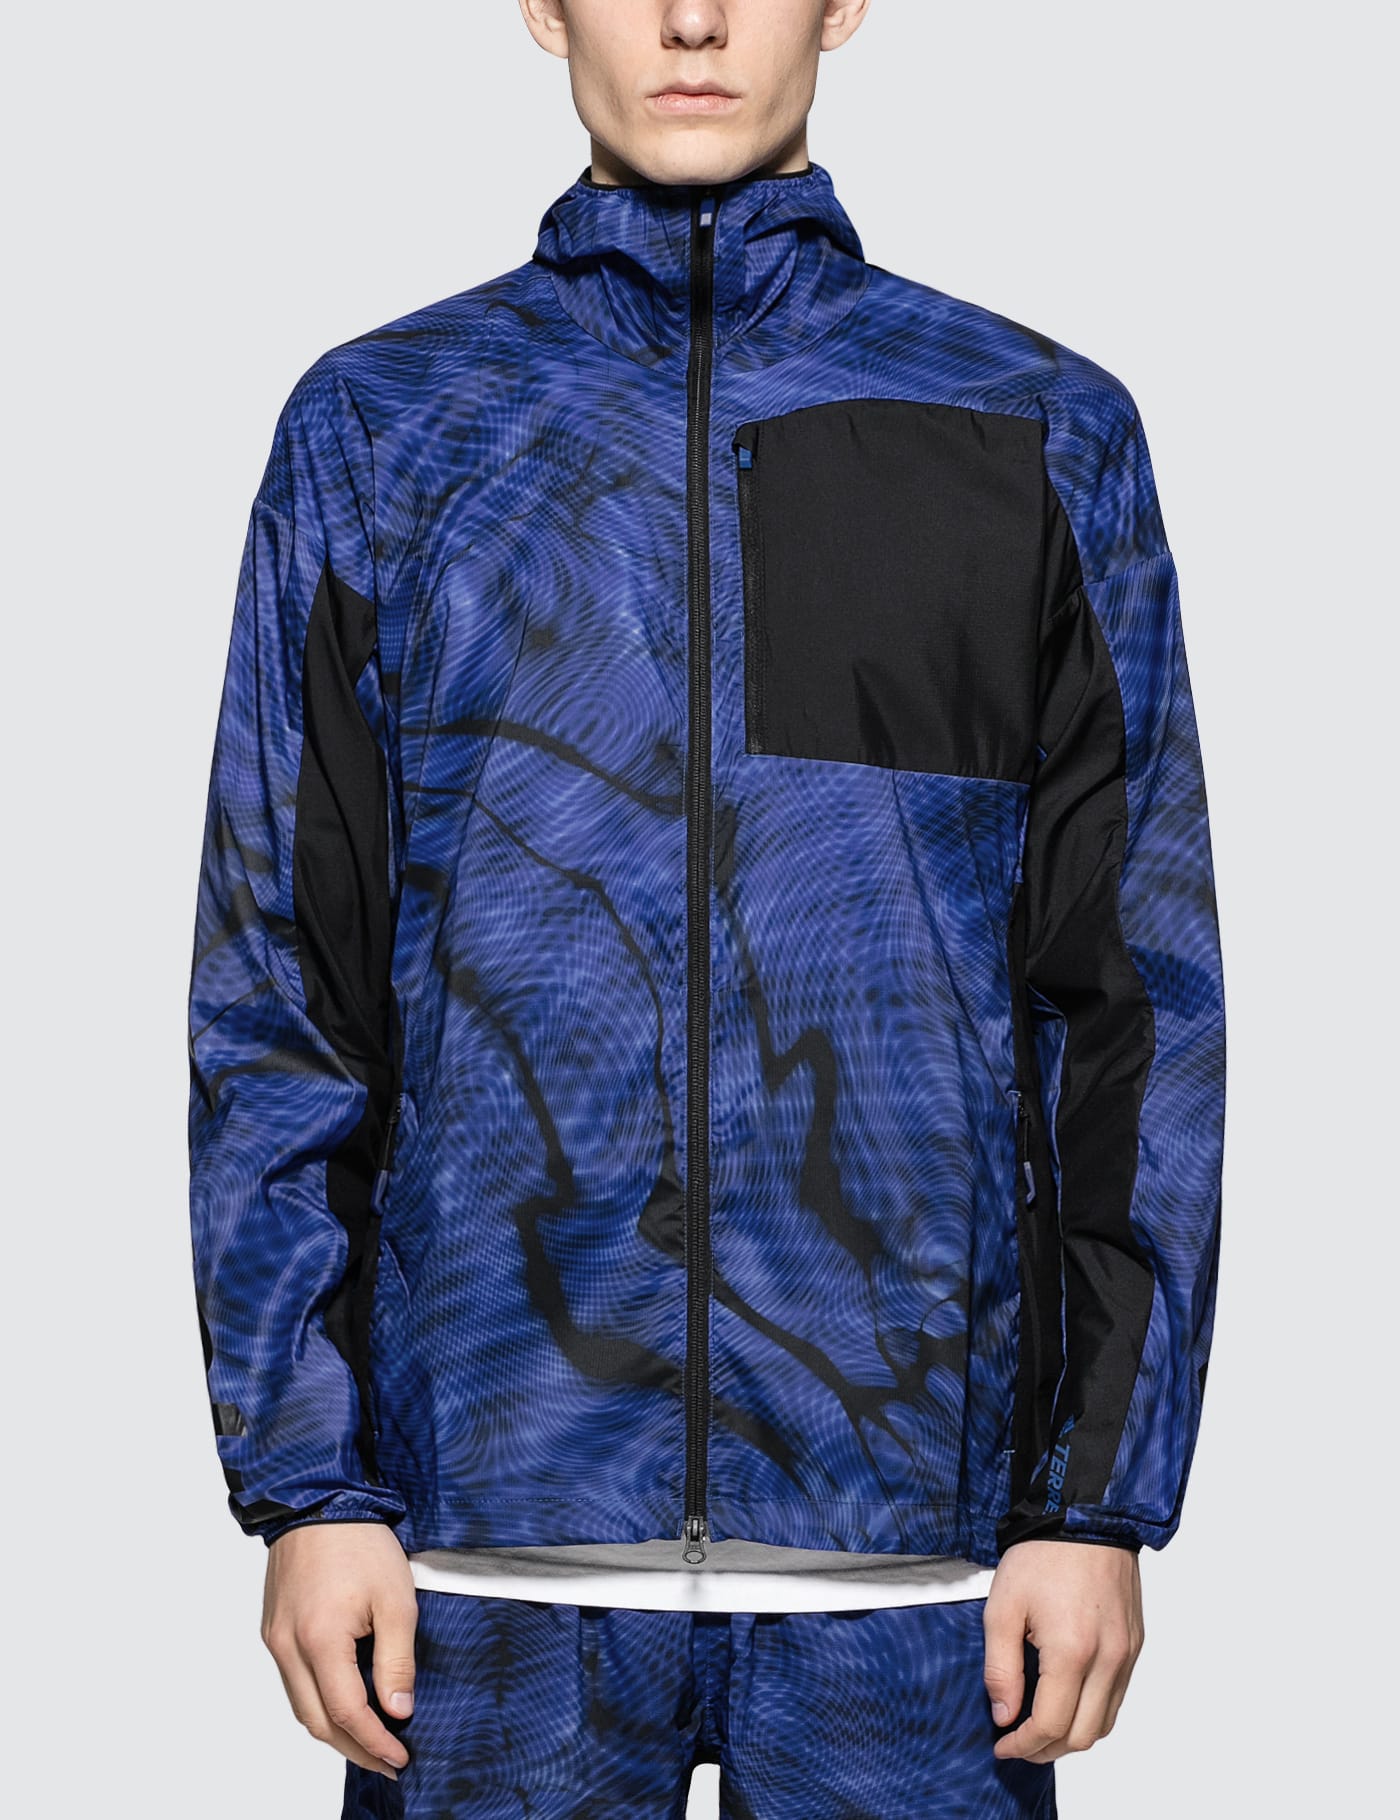 adidas mountaineering jacket